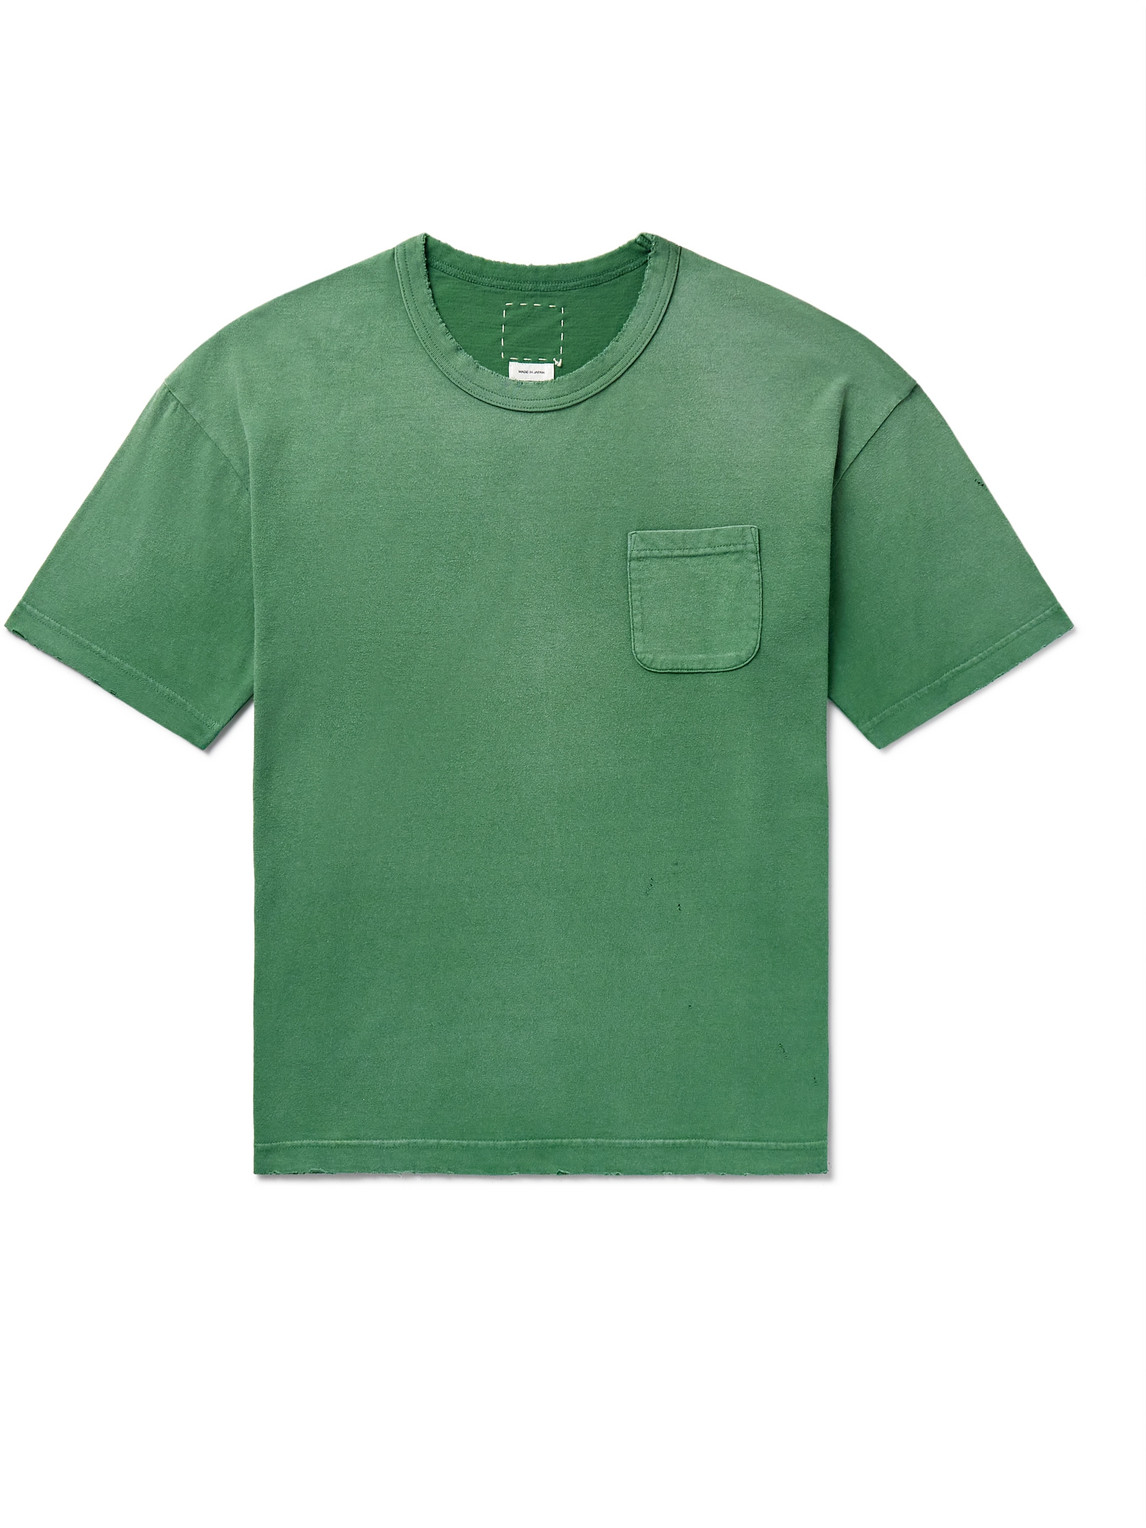 Jumbo Distressed Garment-Dyed Cotton-Jersey T-Shirt